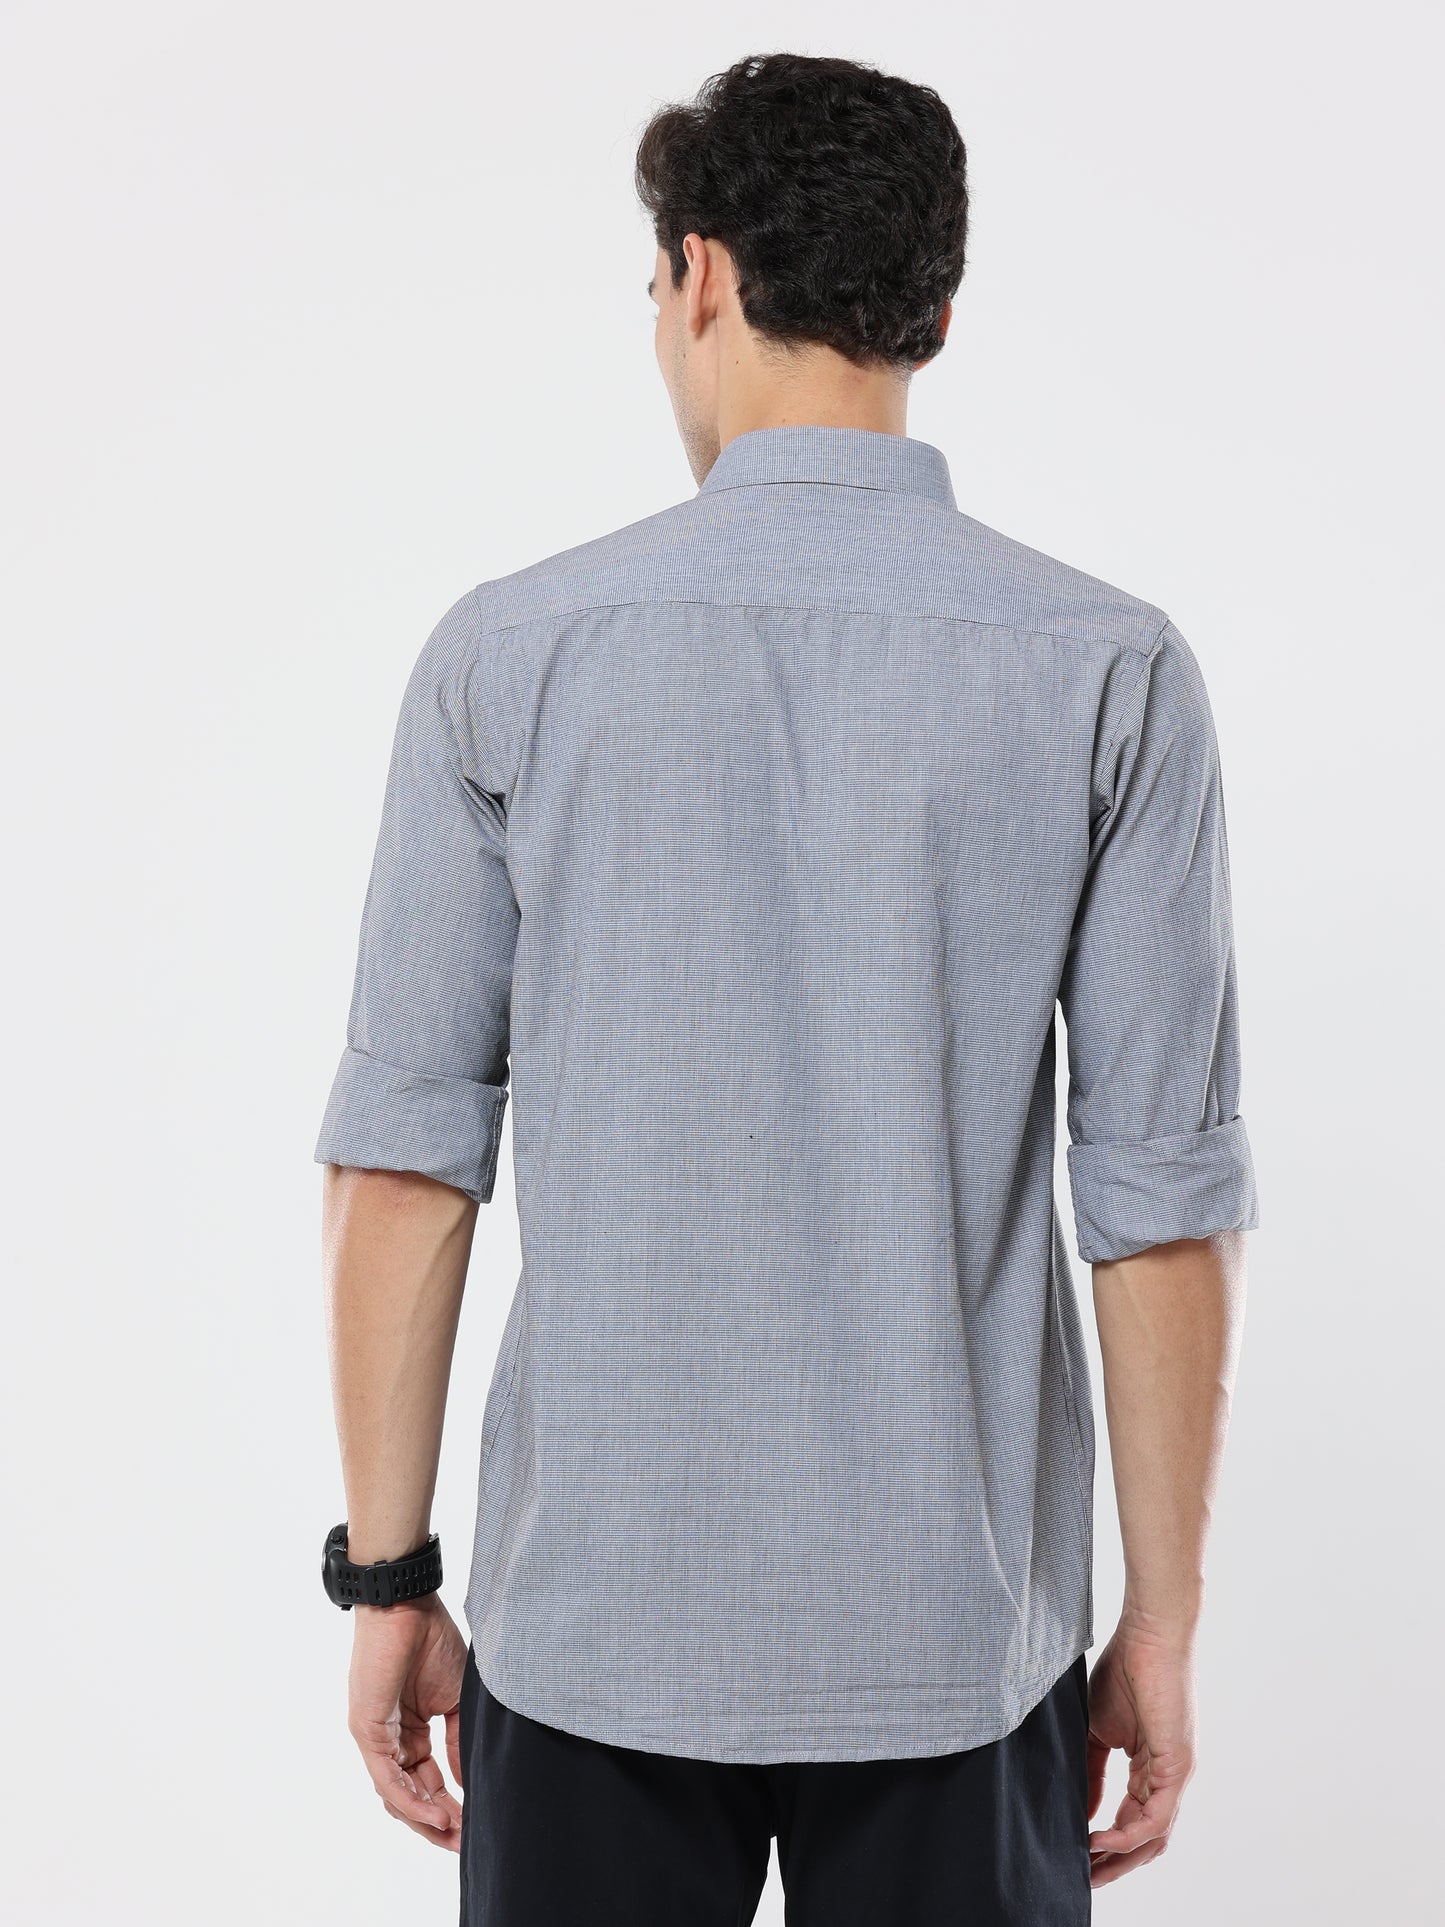 Gray graph checkerd shirt with pocket for men